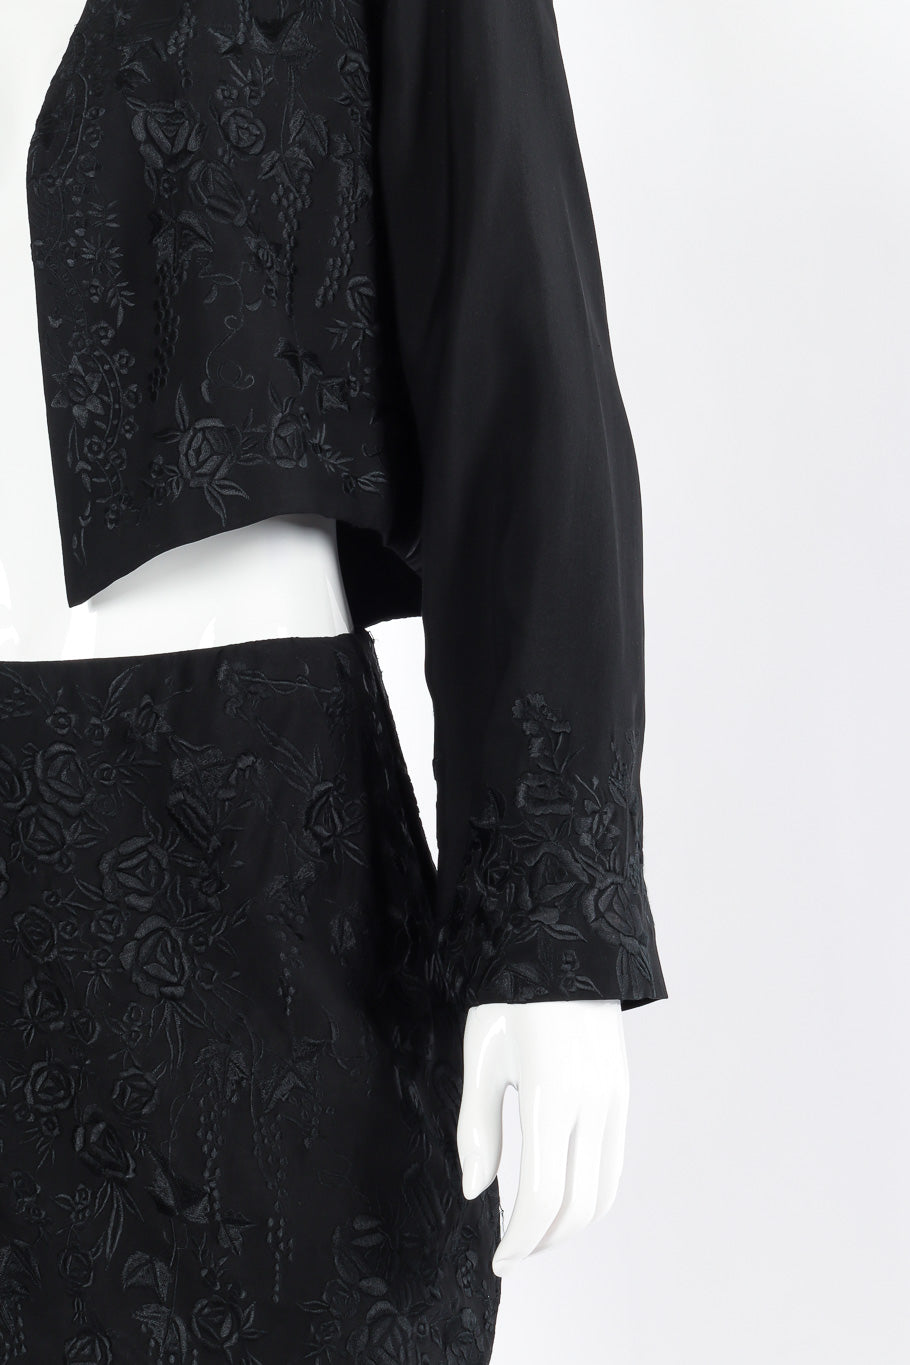 Jacket and skirt set by Donna Karan mannequin sleeve @recessla